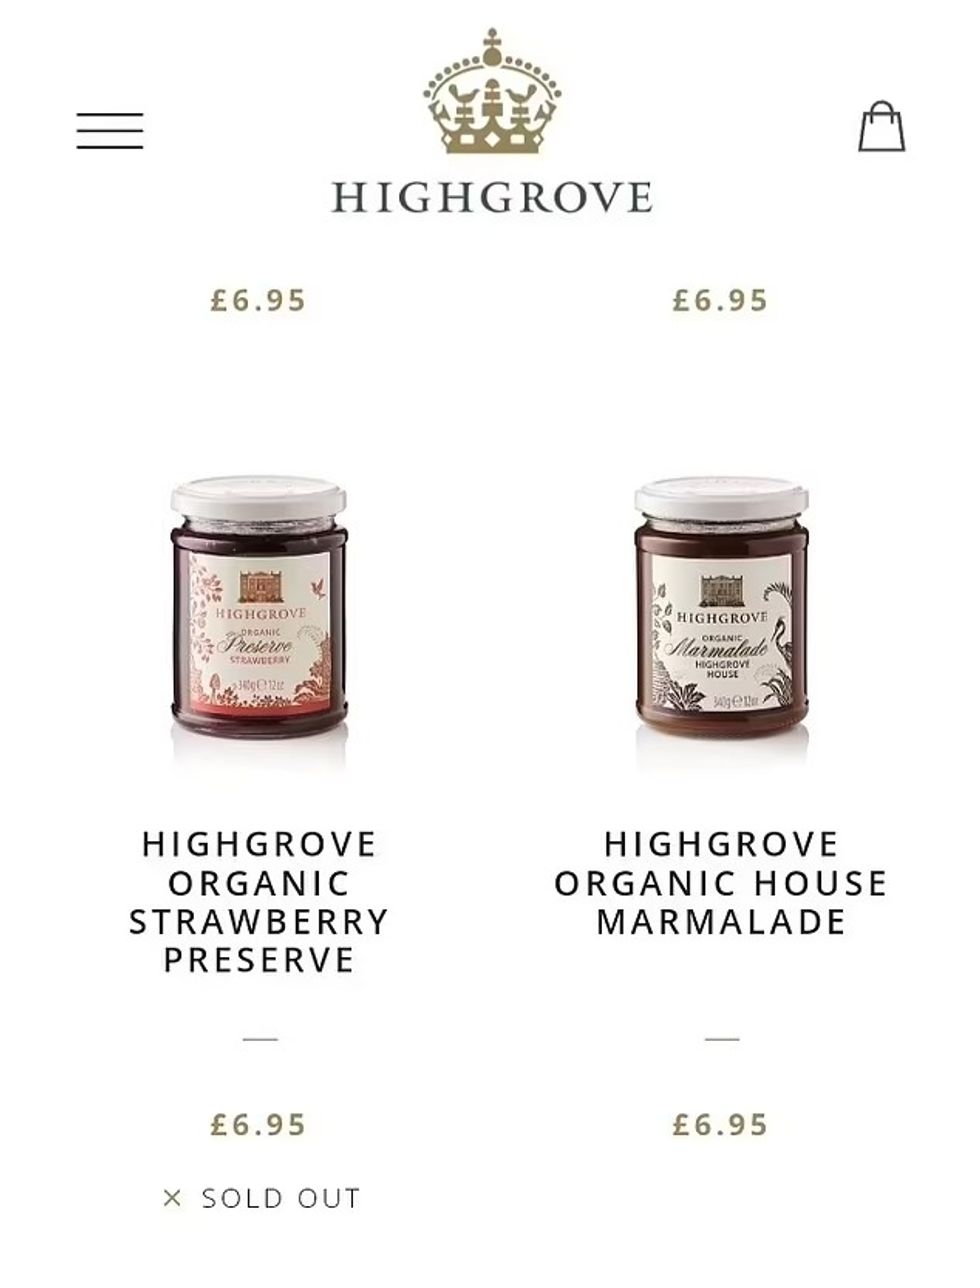 Highgrove jam